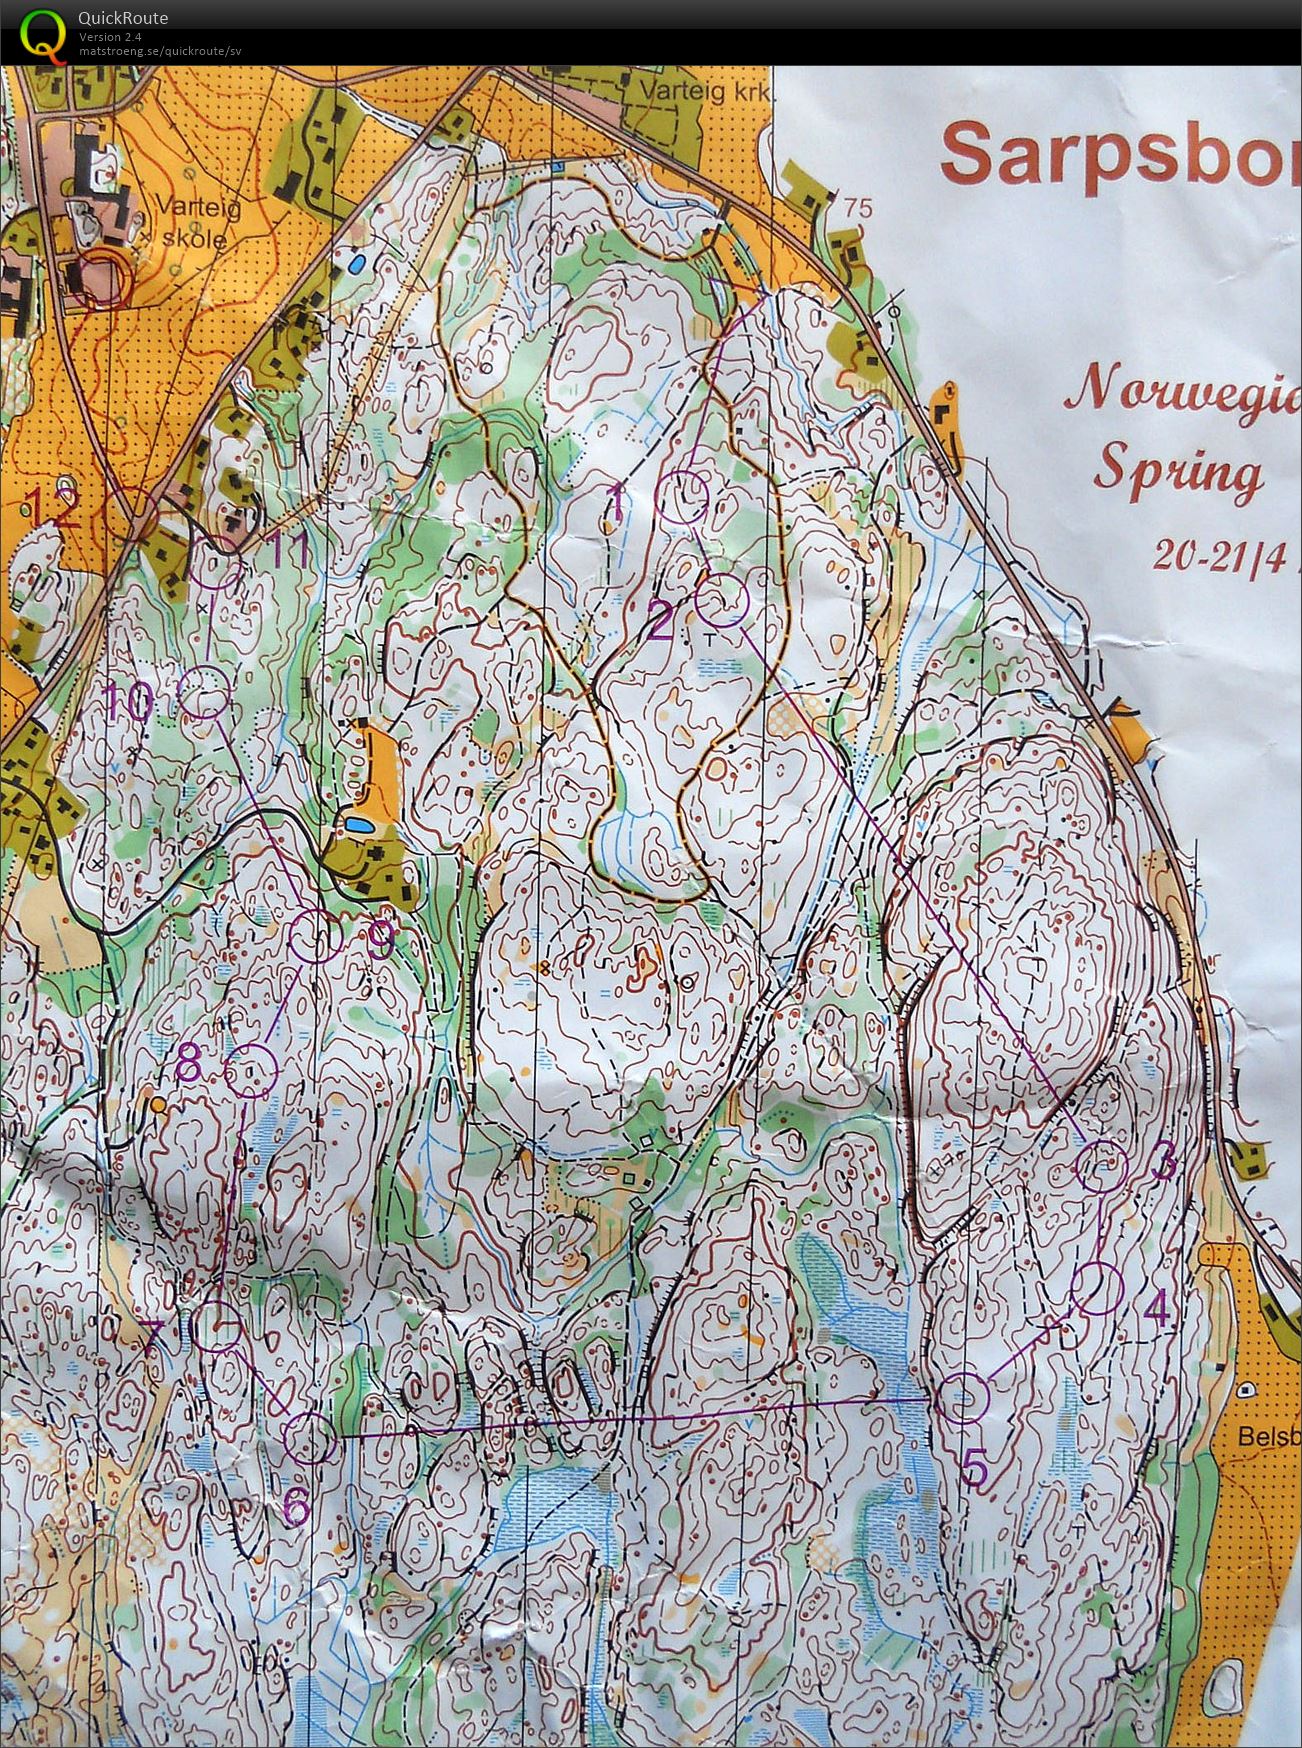 Norwegian spring middle (2013-04-20)